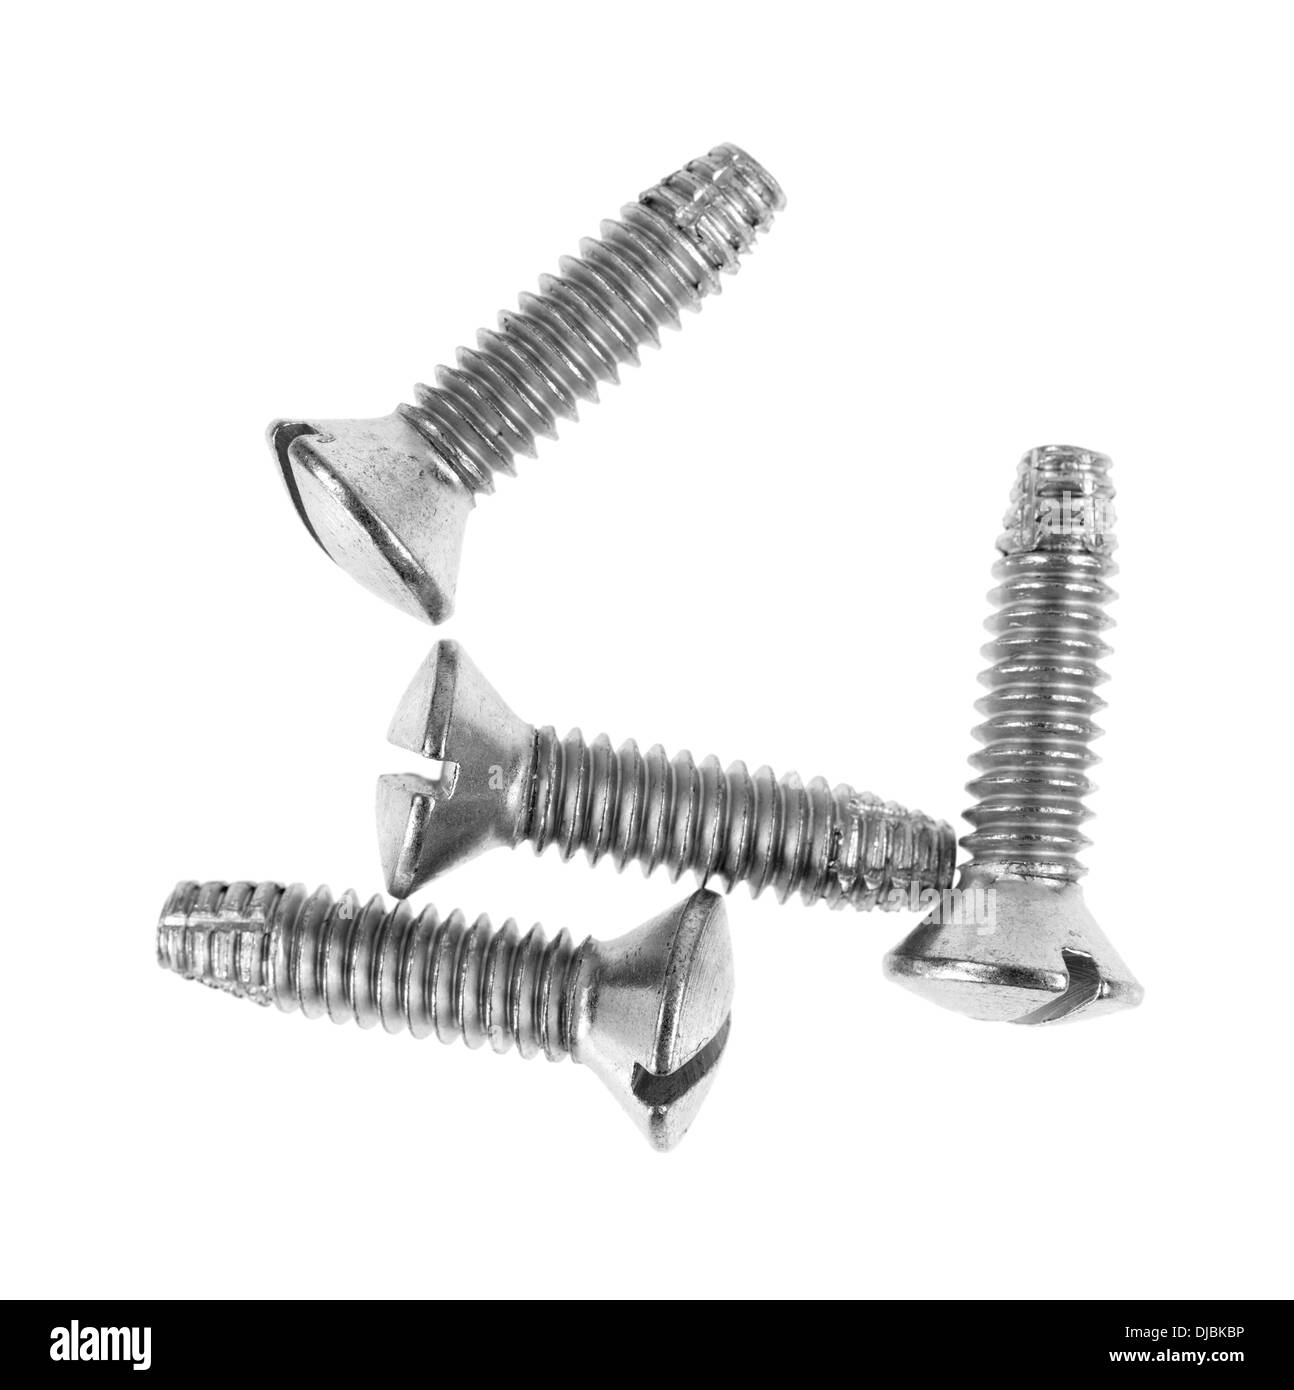 Four pan head thread cutting screws on a white background. Stock Photo